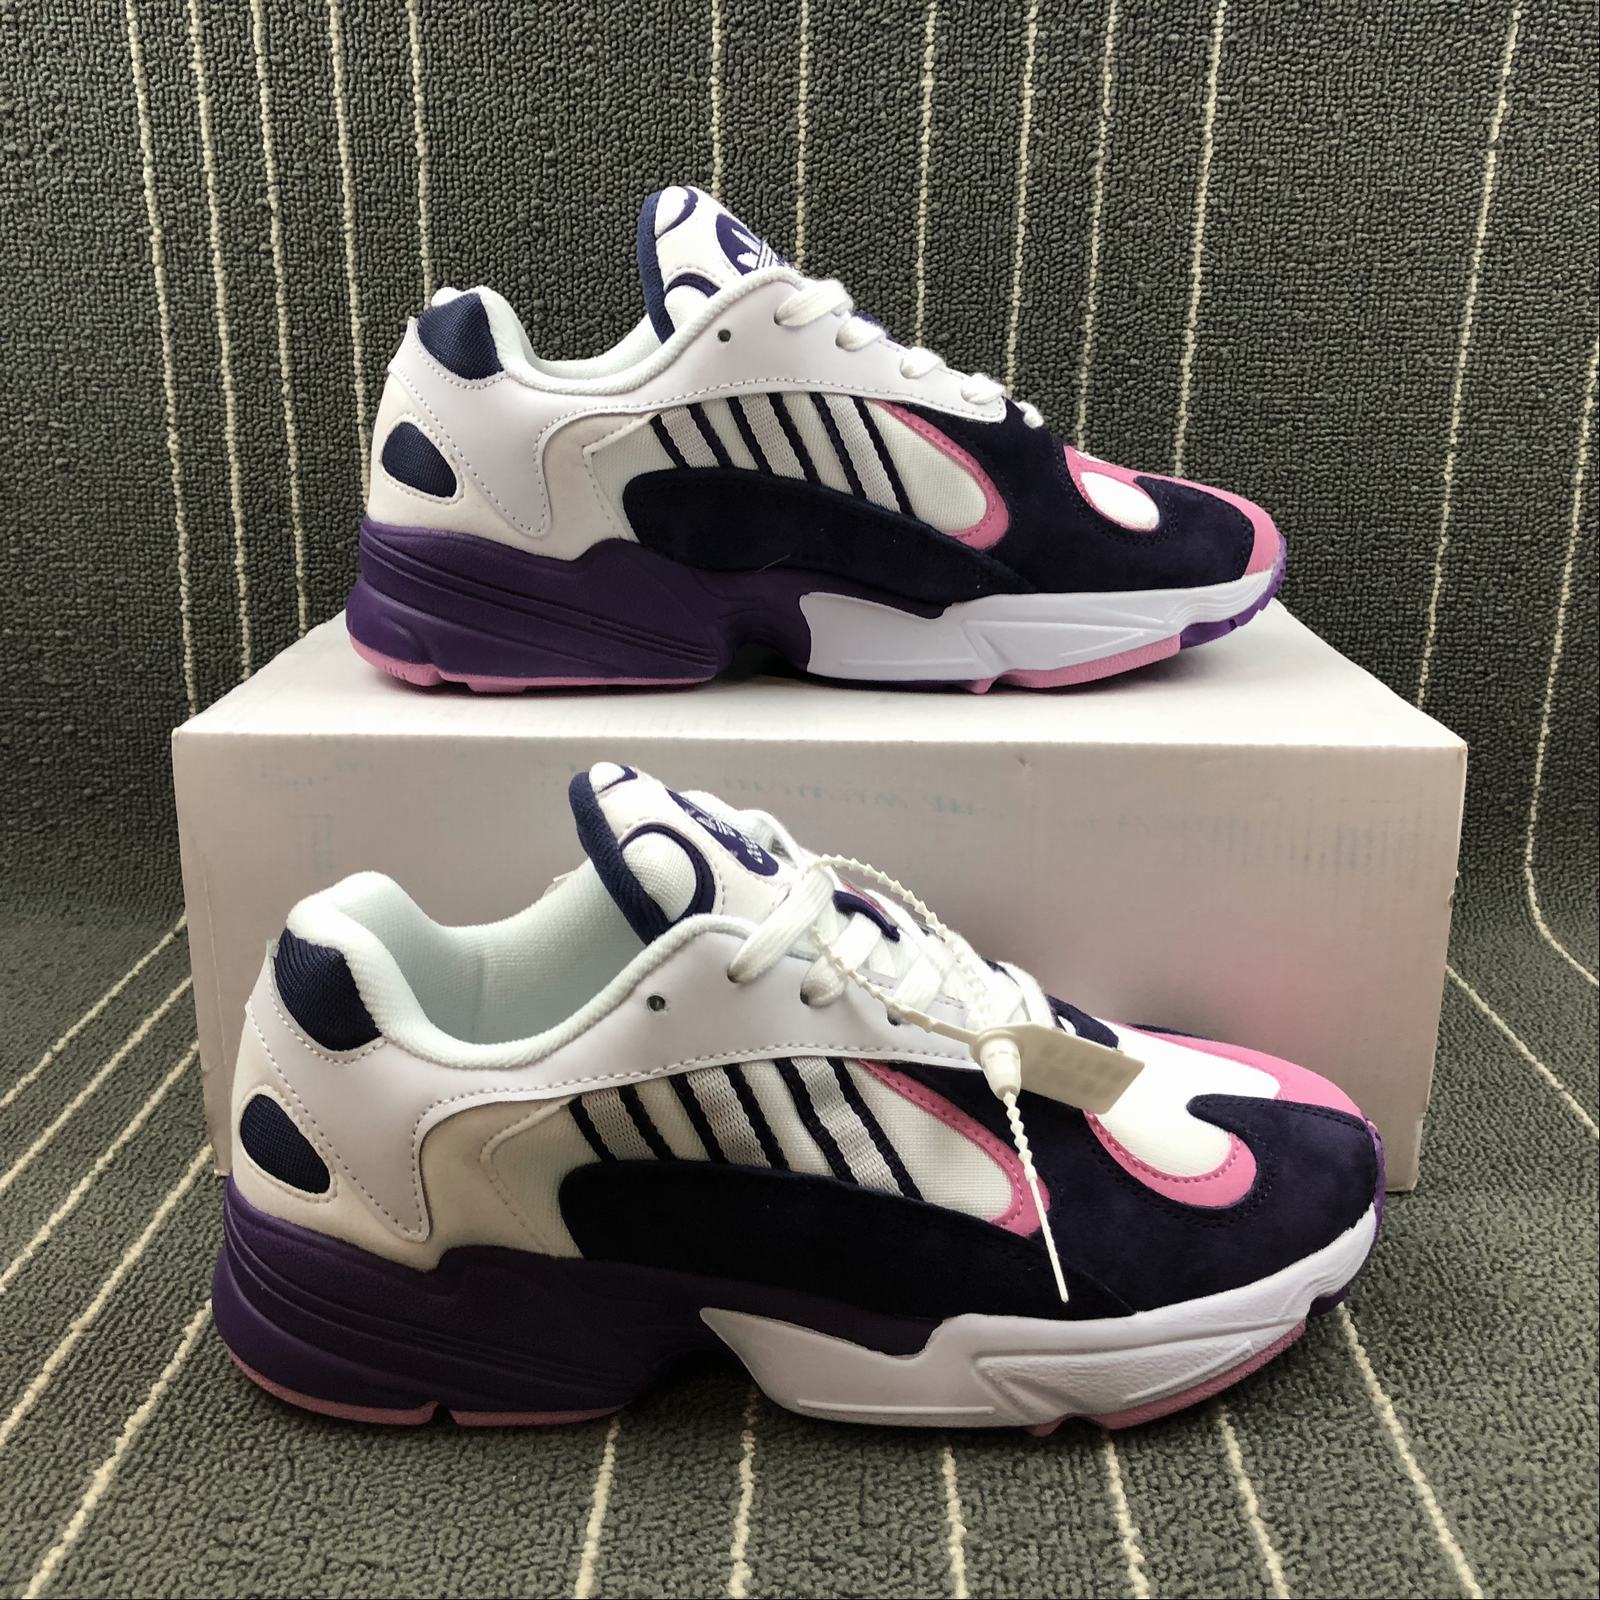 adidas dragon purple